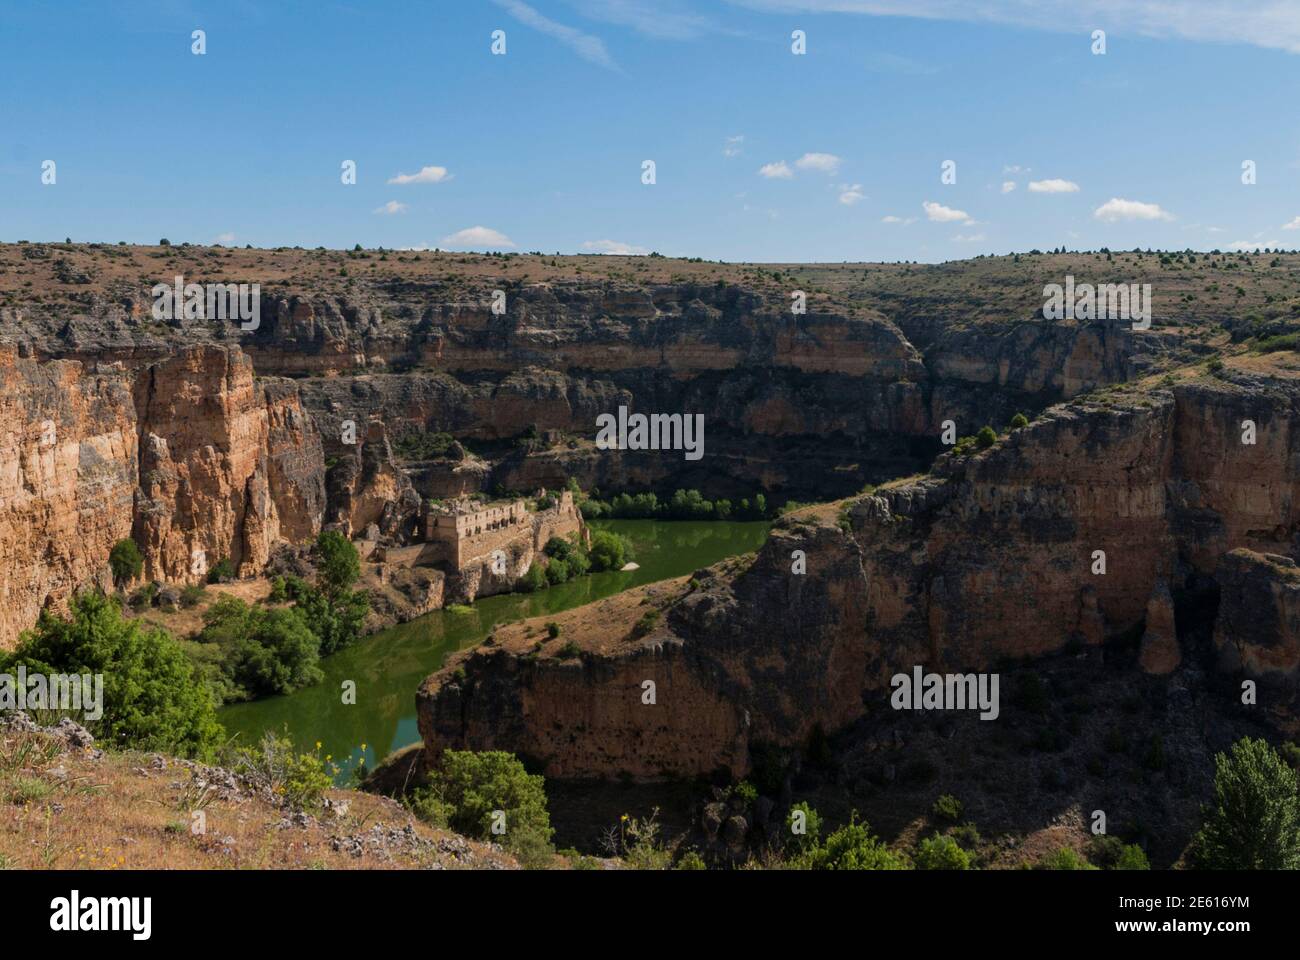 Monasterio de la Hoz (Sebulcor, Segovia, Spain) Limestone river canyon landscape with monastery ruins Stock Photo